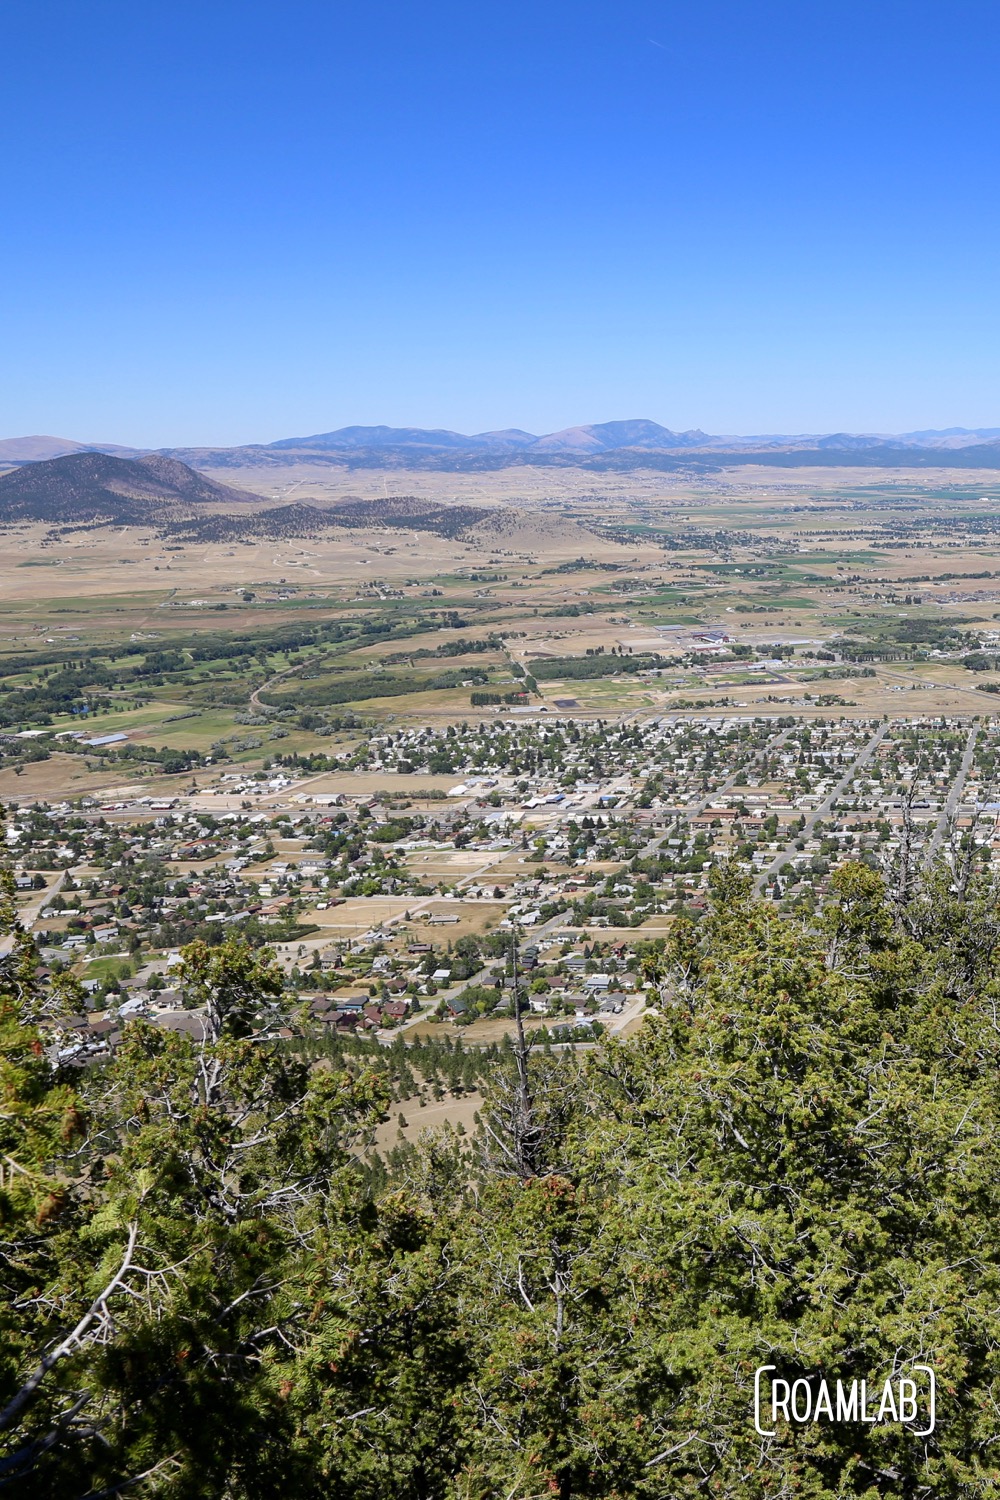 Vista from the peak of Mount Helena, looking over Helena, Montana.